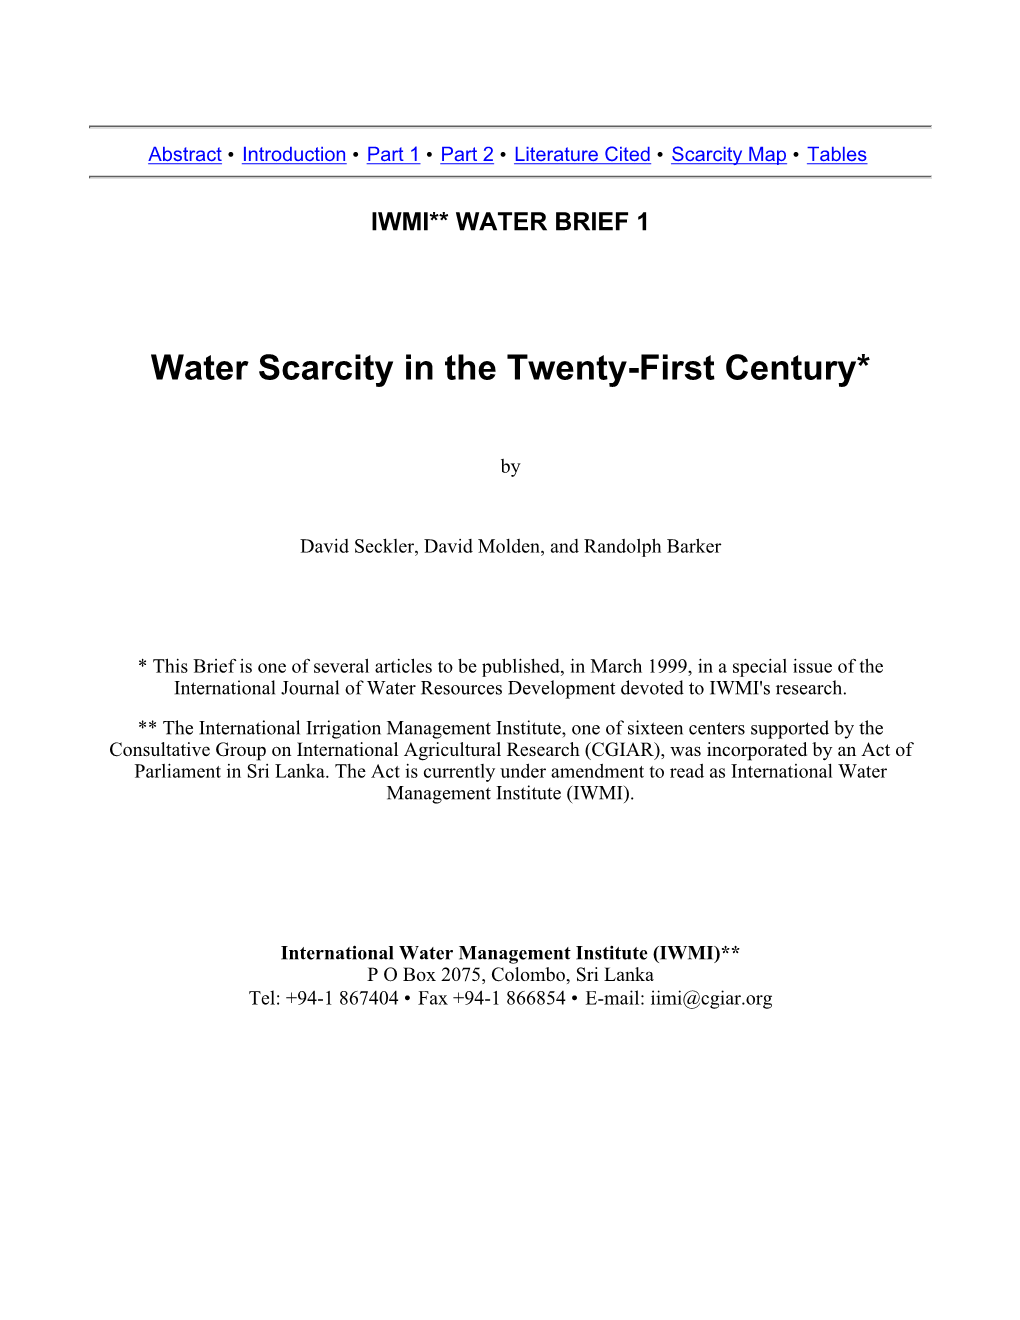 Water Scarcity in the Twenty-First Century*